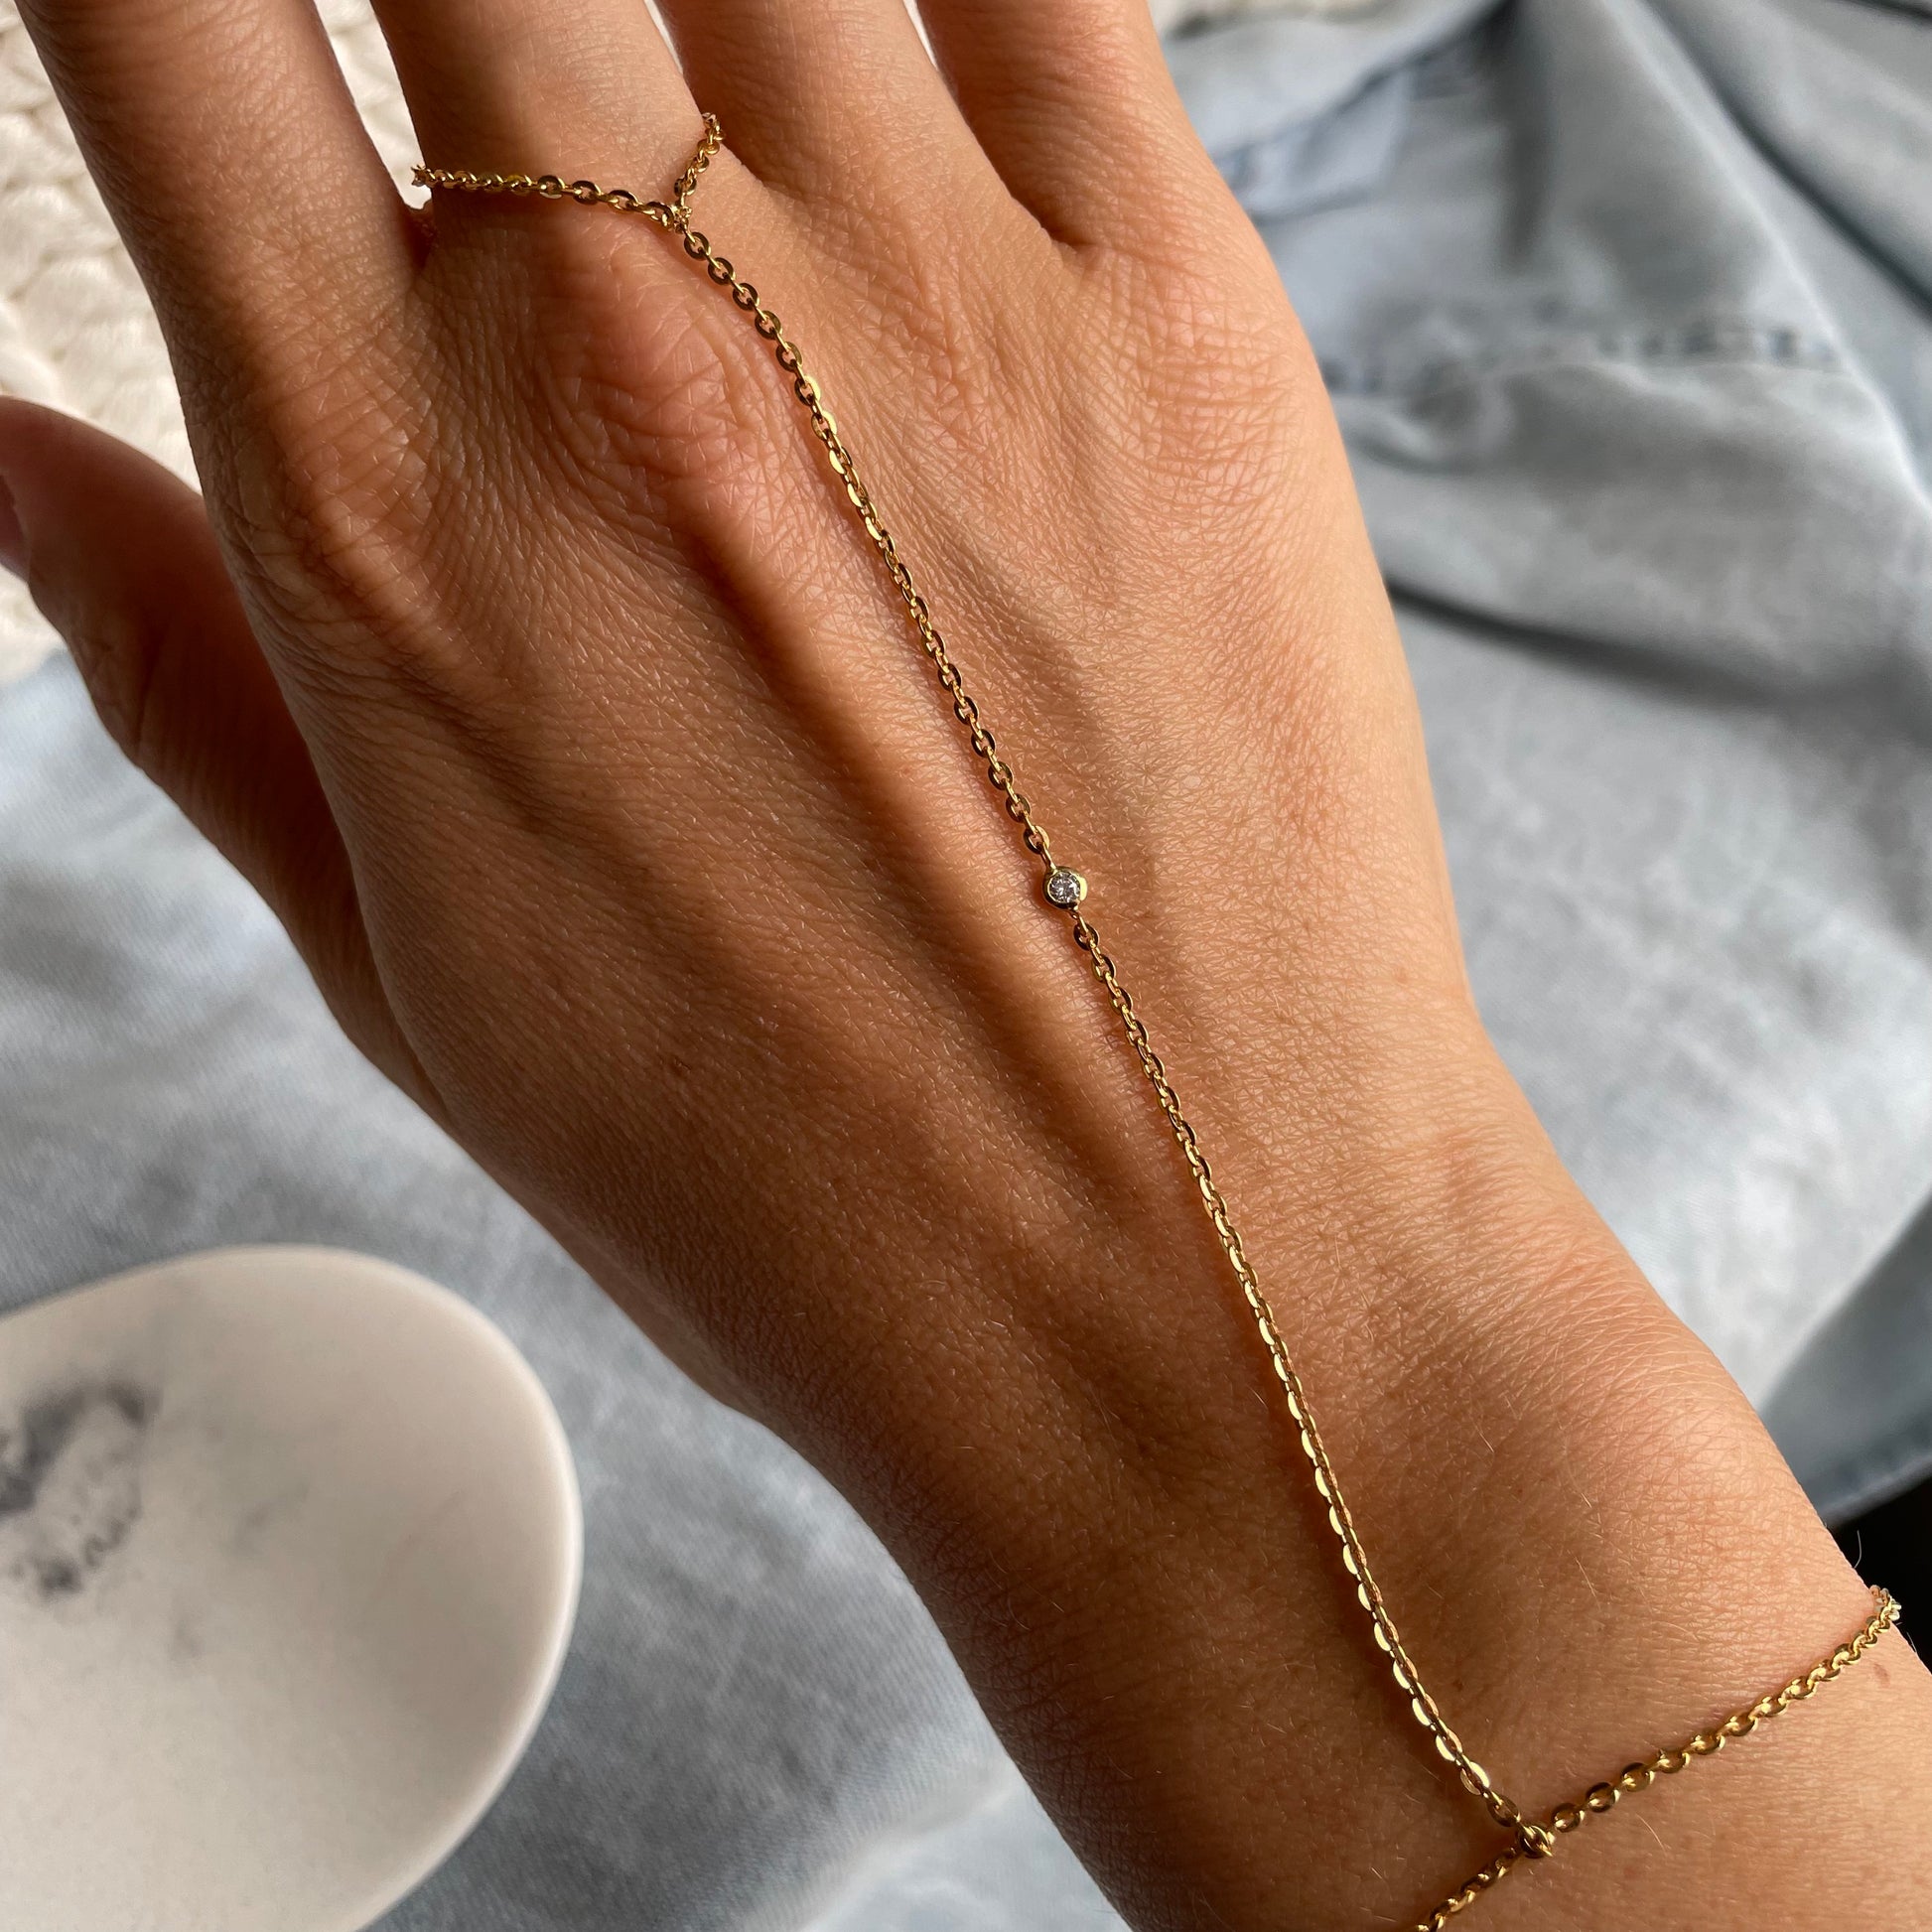 One bezel-set diamond Hand chain/Finger Sleeve bracelet - - Jewelry - Goldie Paris Jewelry - Bezel Bracelet Ring